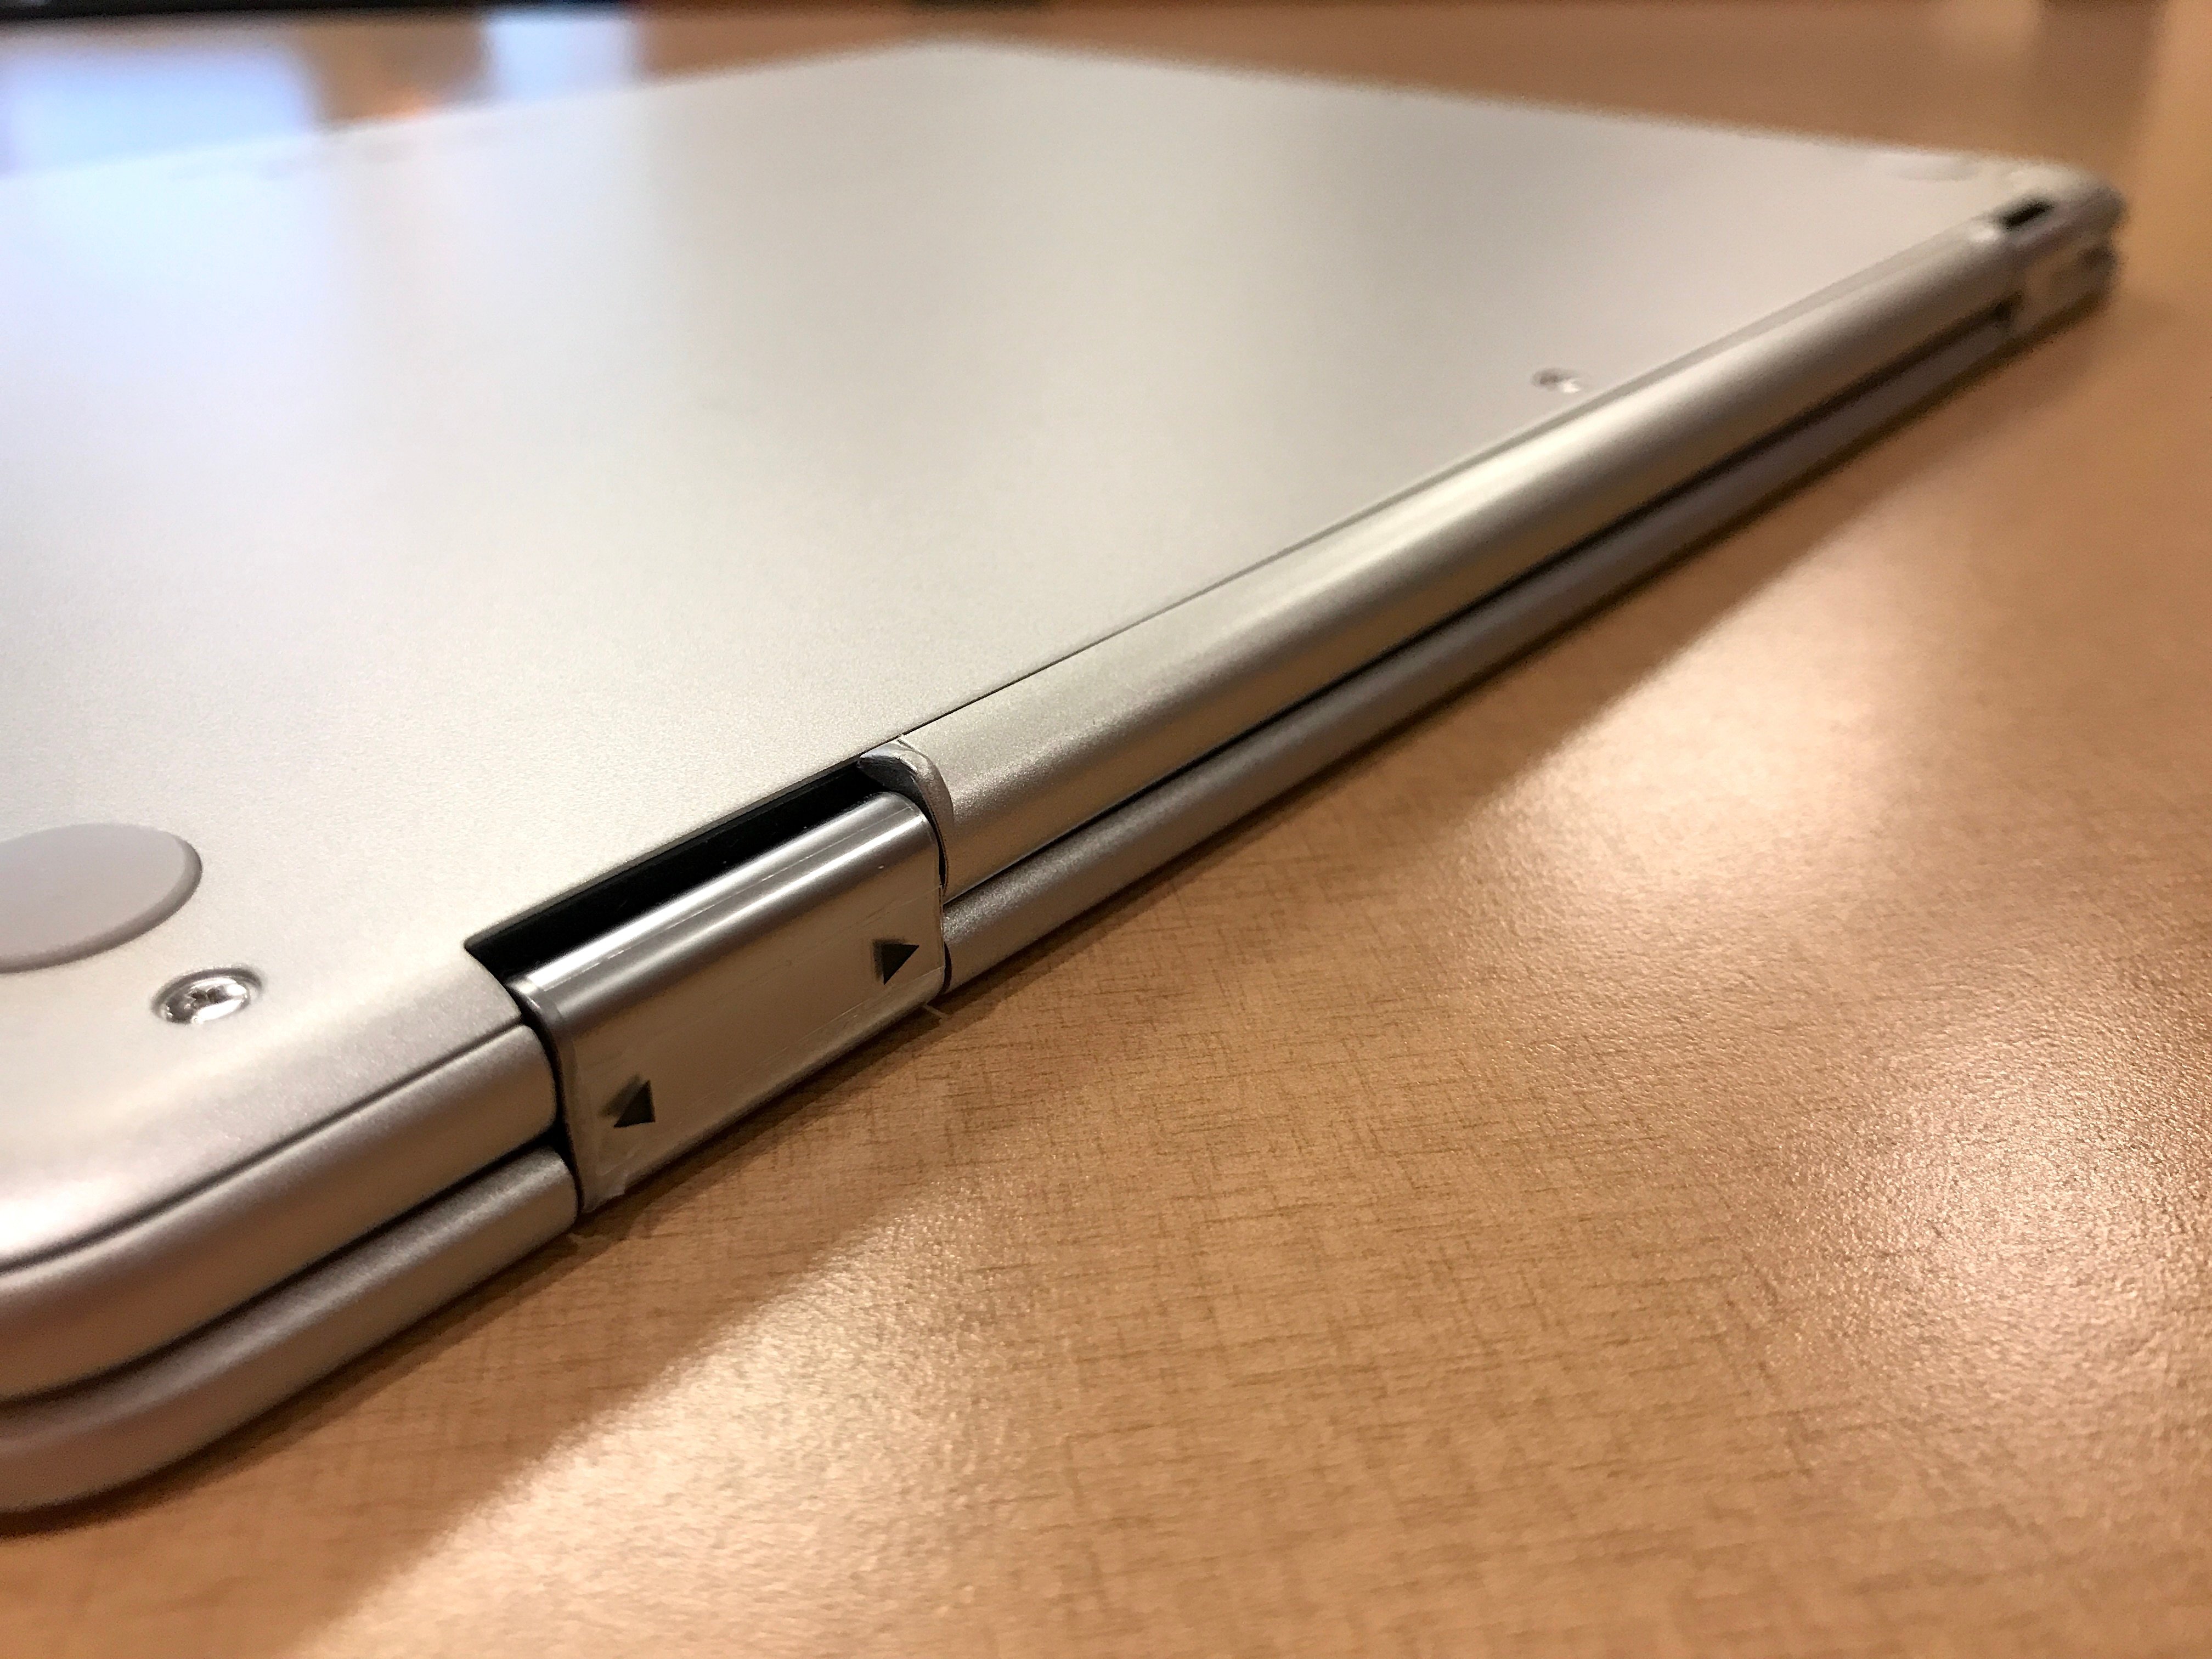 Samsung Chromebook Plus hinges back edge